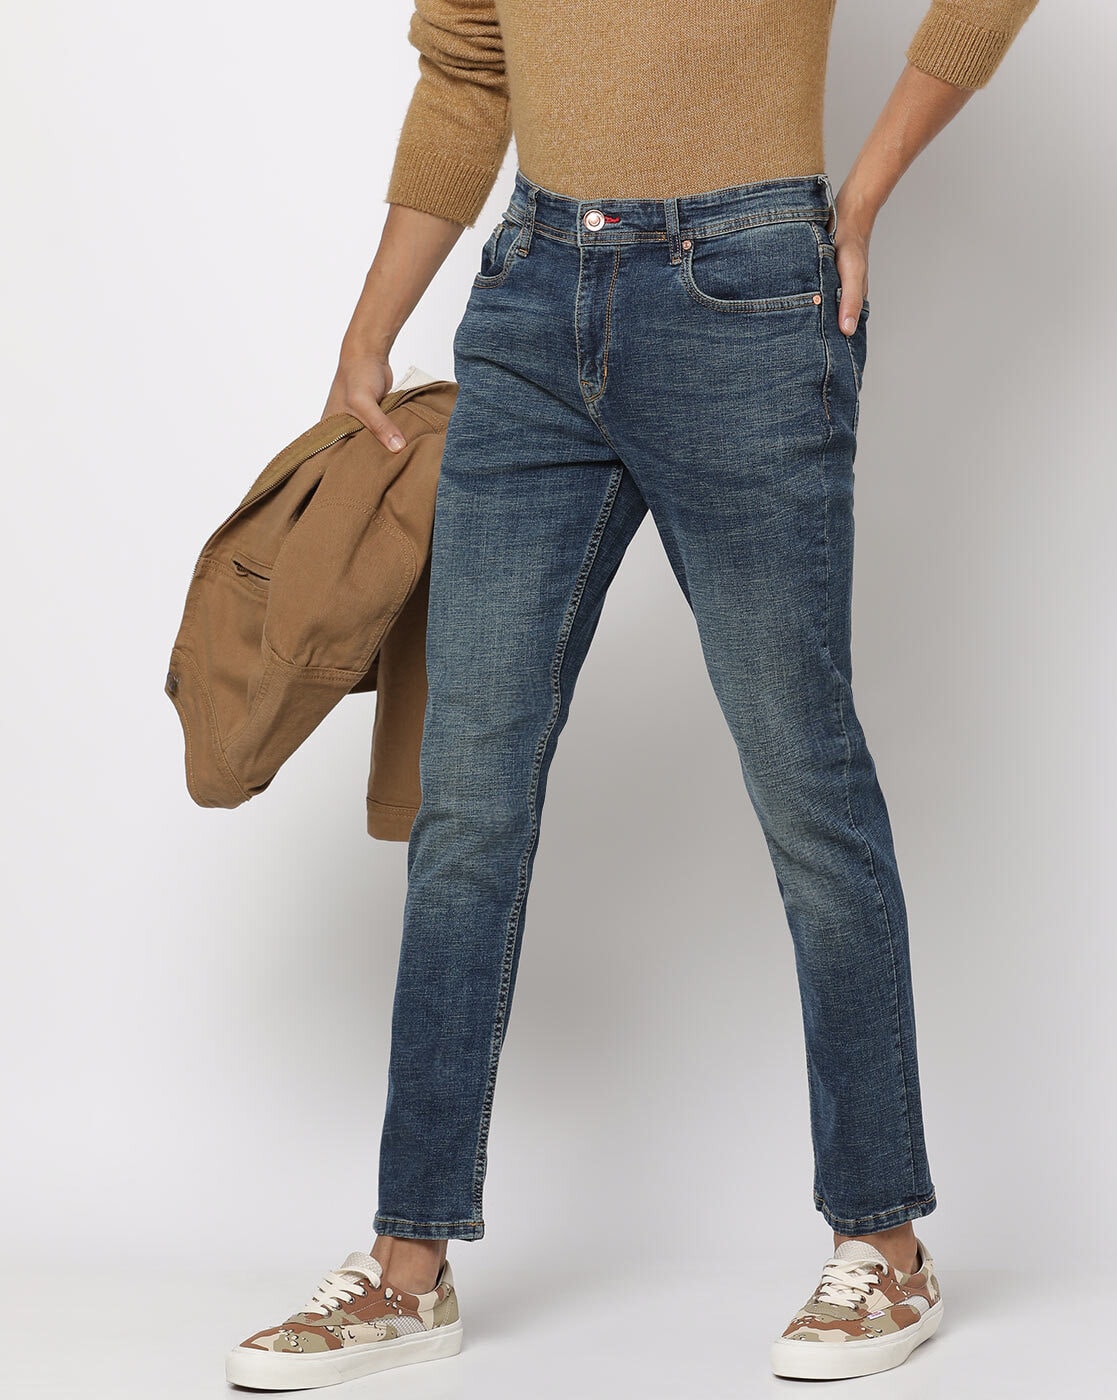 Lee Cooper Slim Leg Jeans Mens Gents Pants Trousers Bottoms Lightweight Zip  | eBay